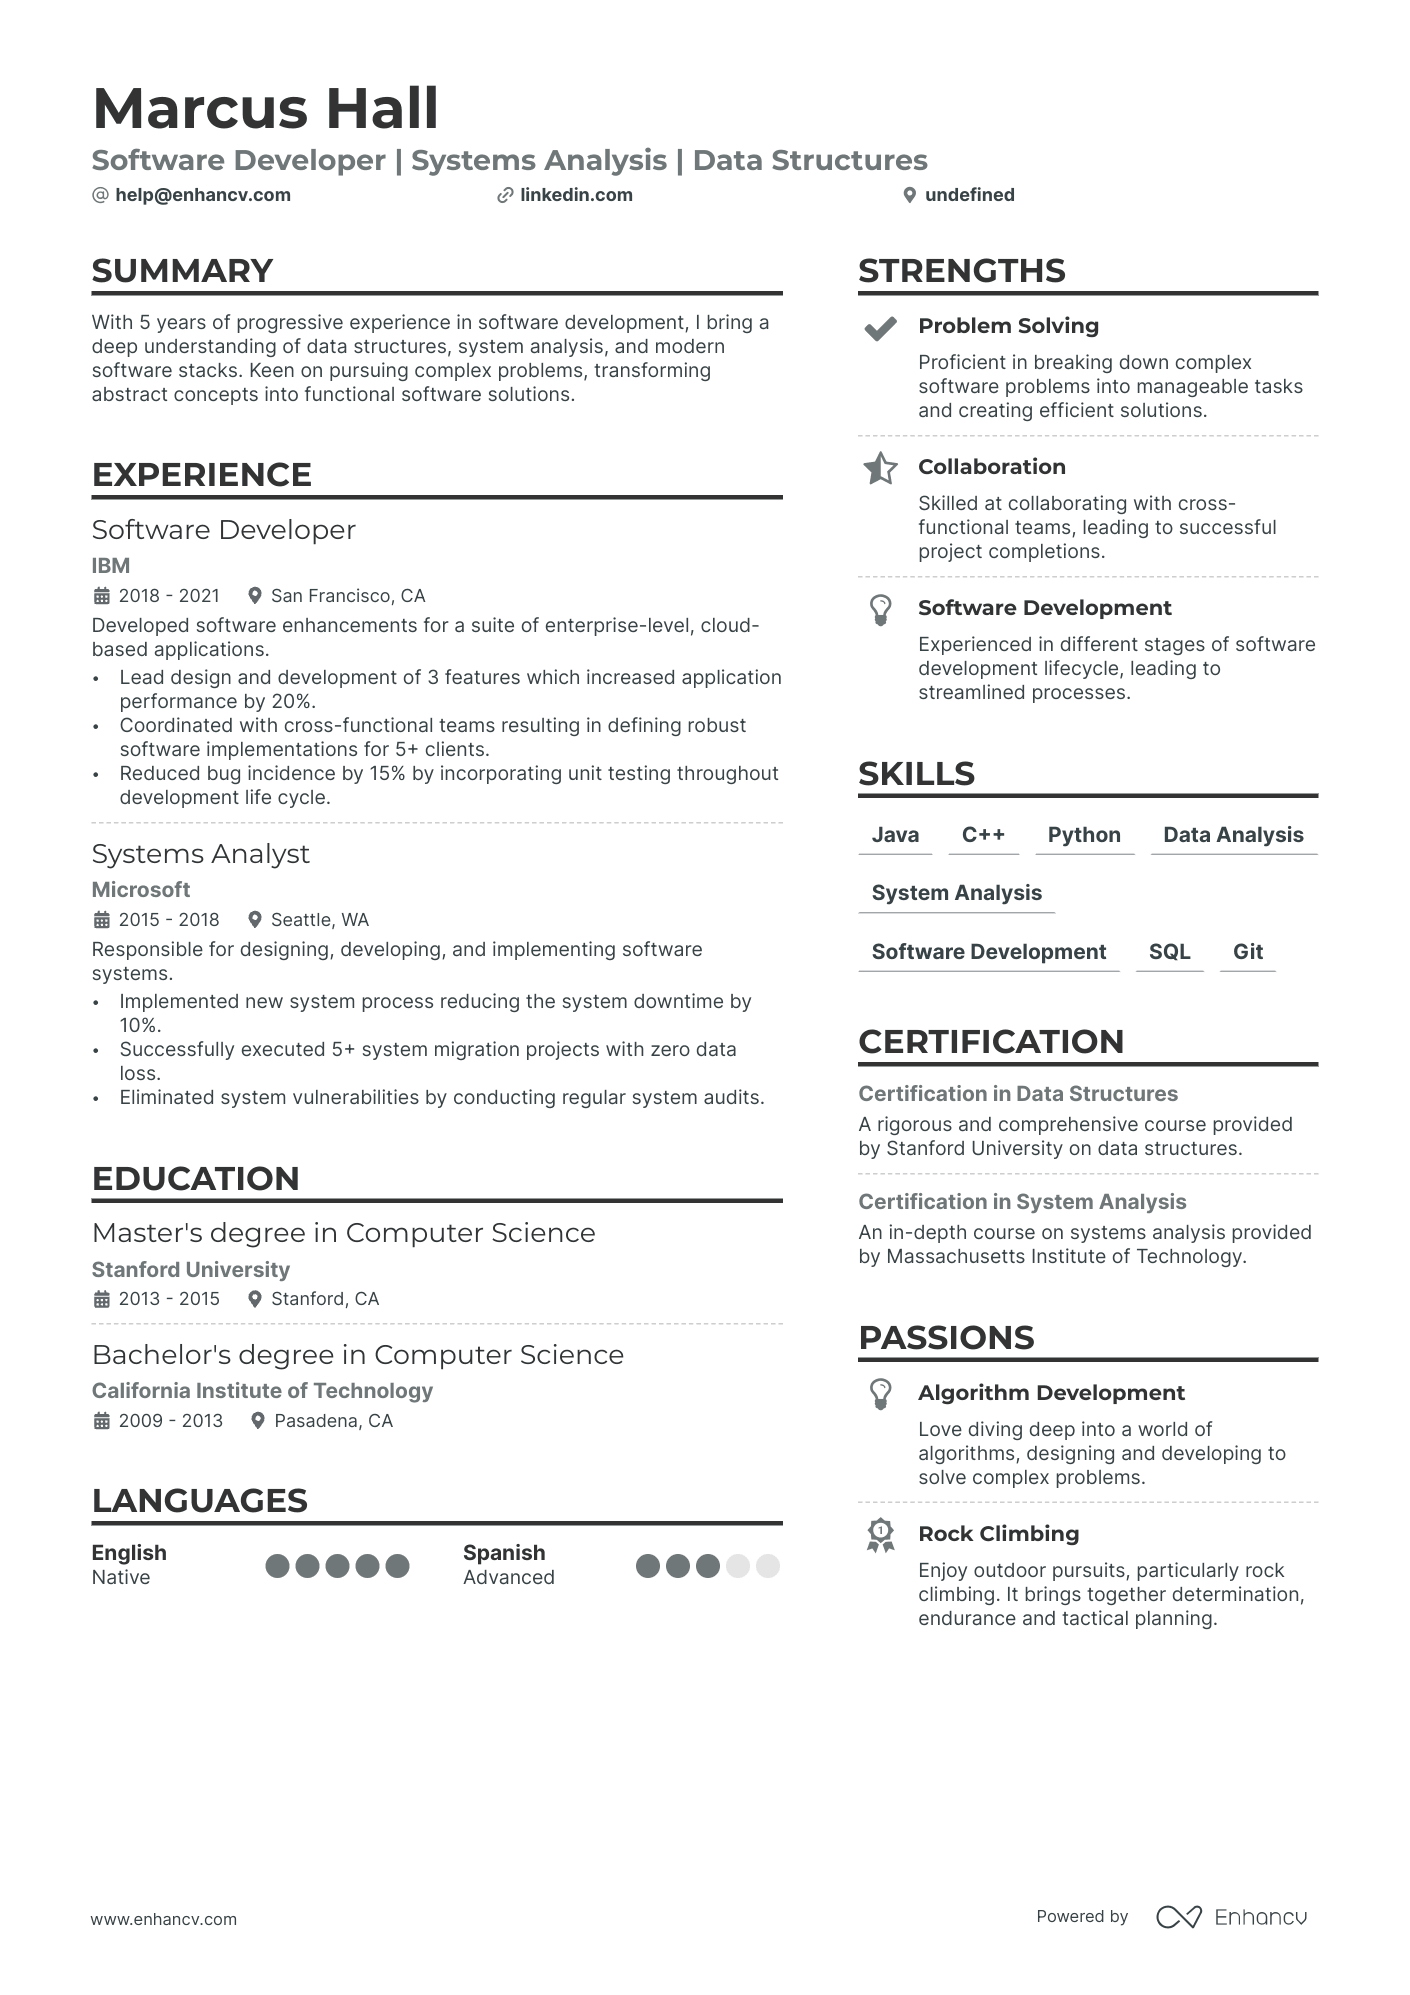 Computer science internship resume example